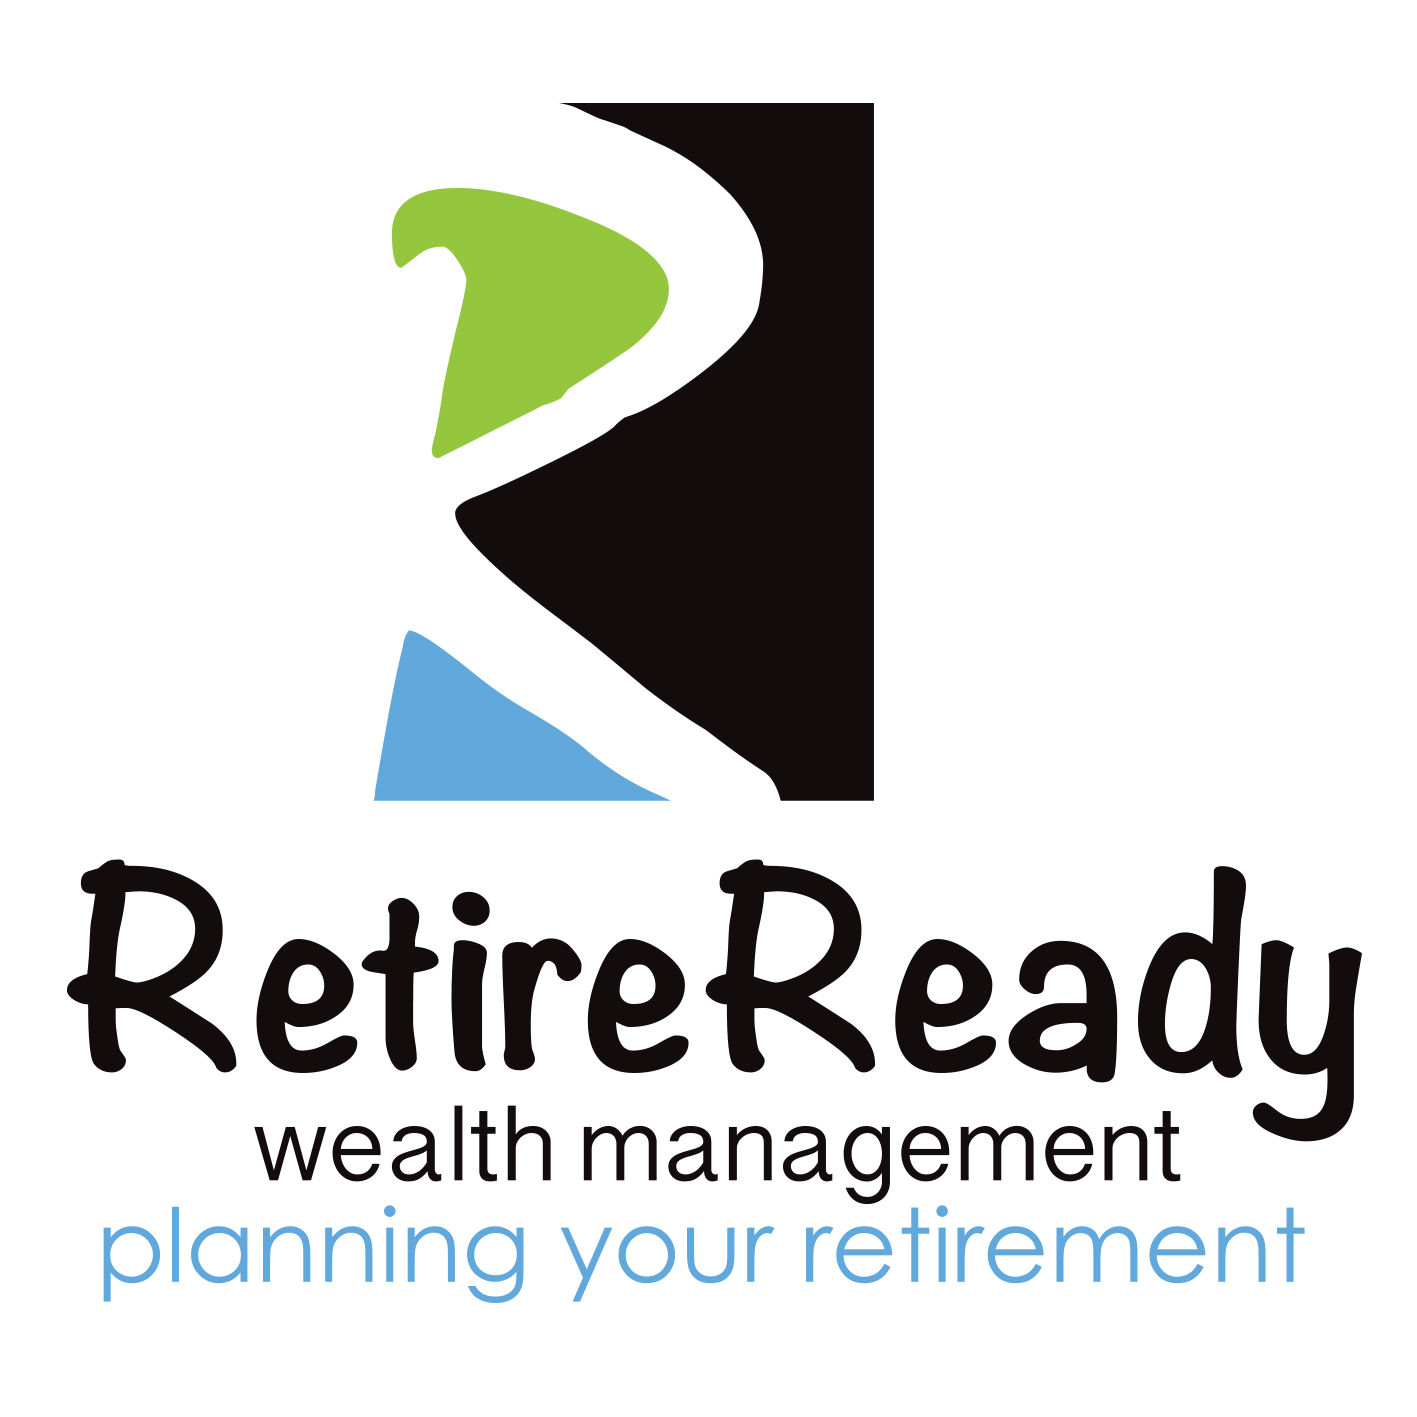 Western Australia, Australia 营销公司 Abundance Web Designs 通过 SEO 和数字营销帮助了 Retire Ready Wealth Management 发展业务